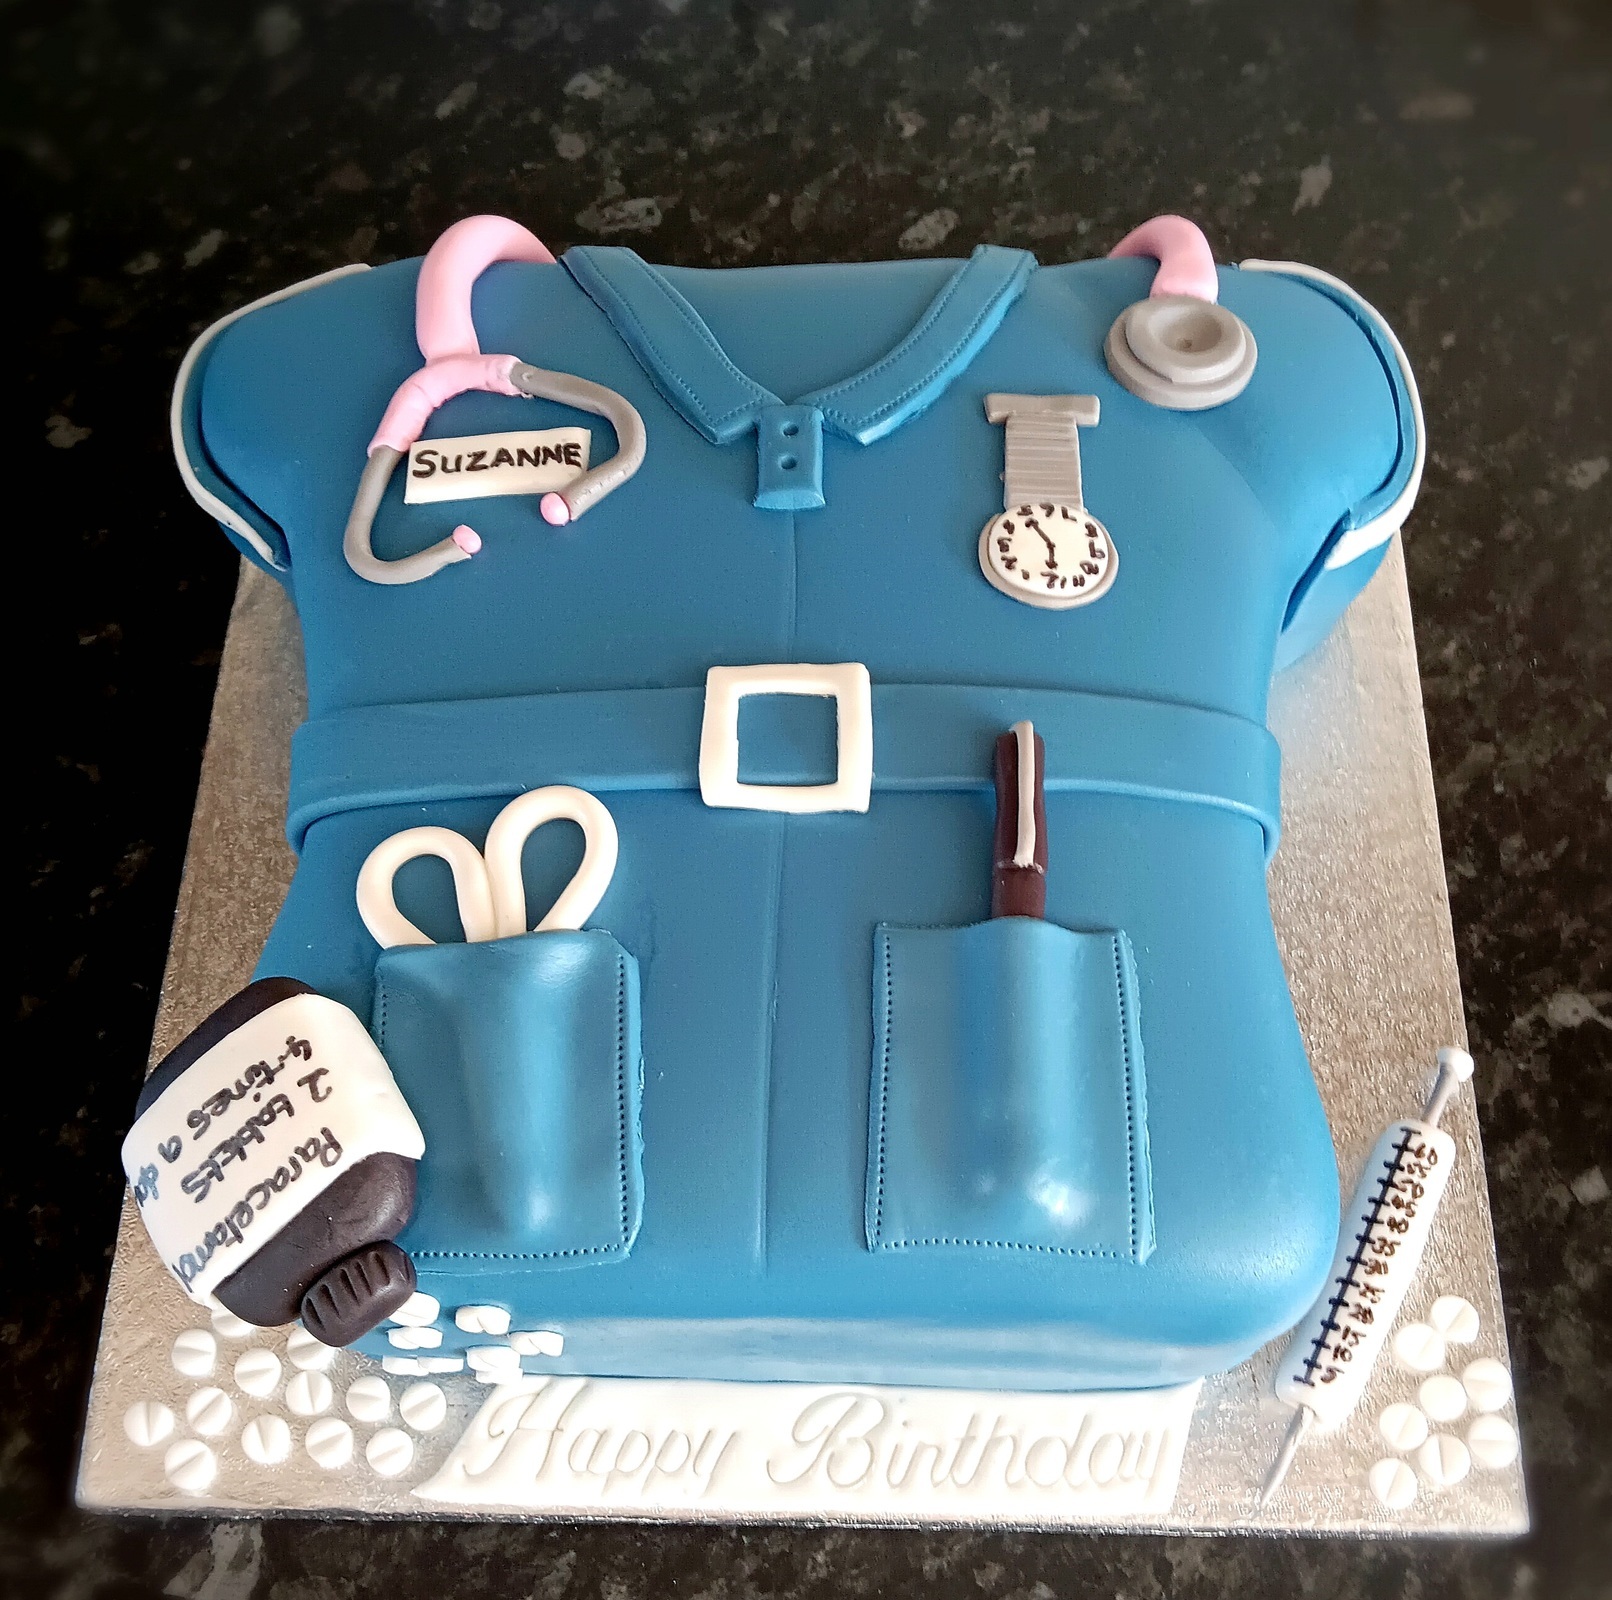 Nurses uniform inspired birthday cake